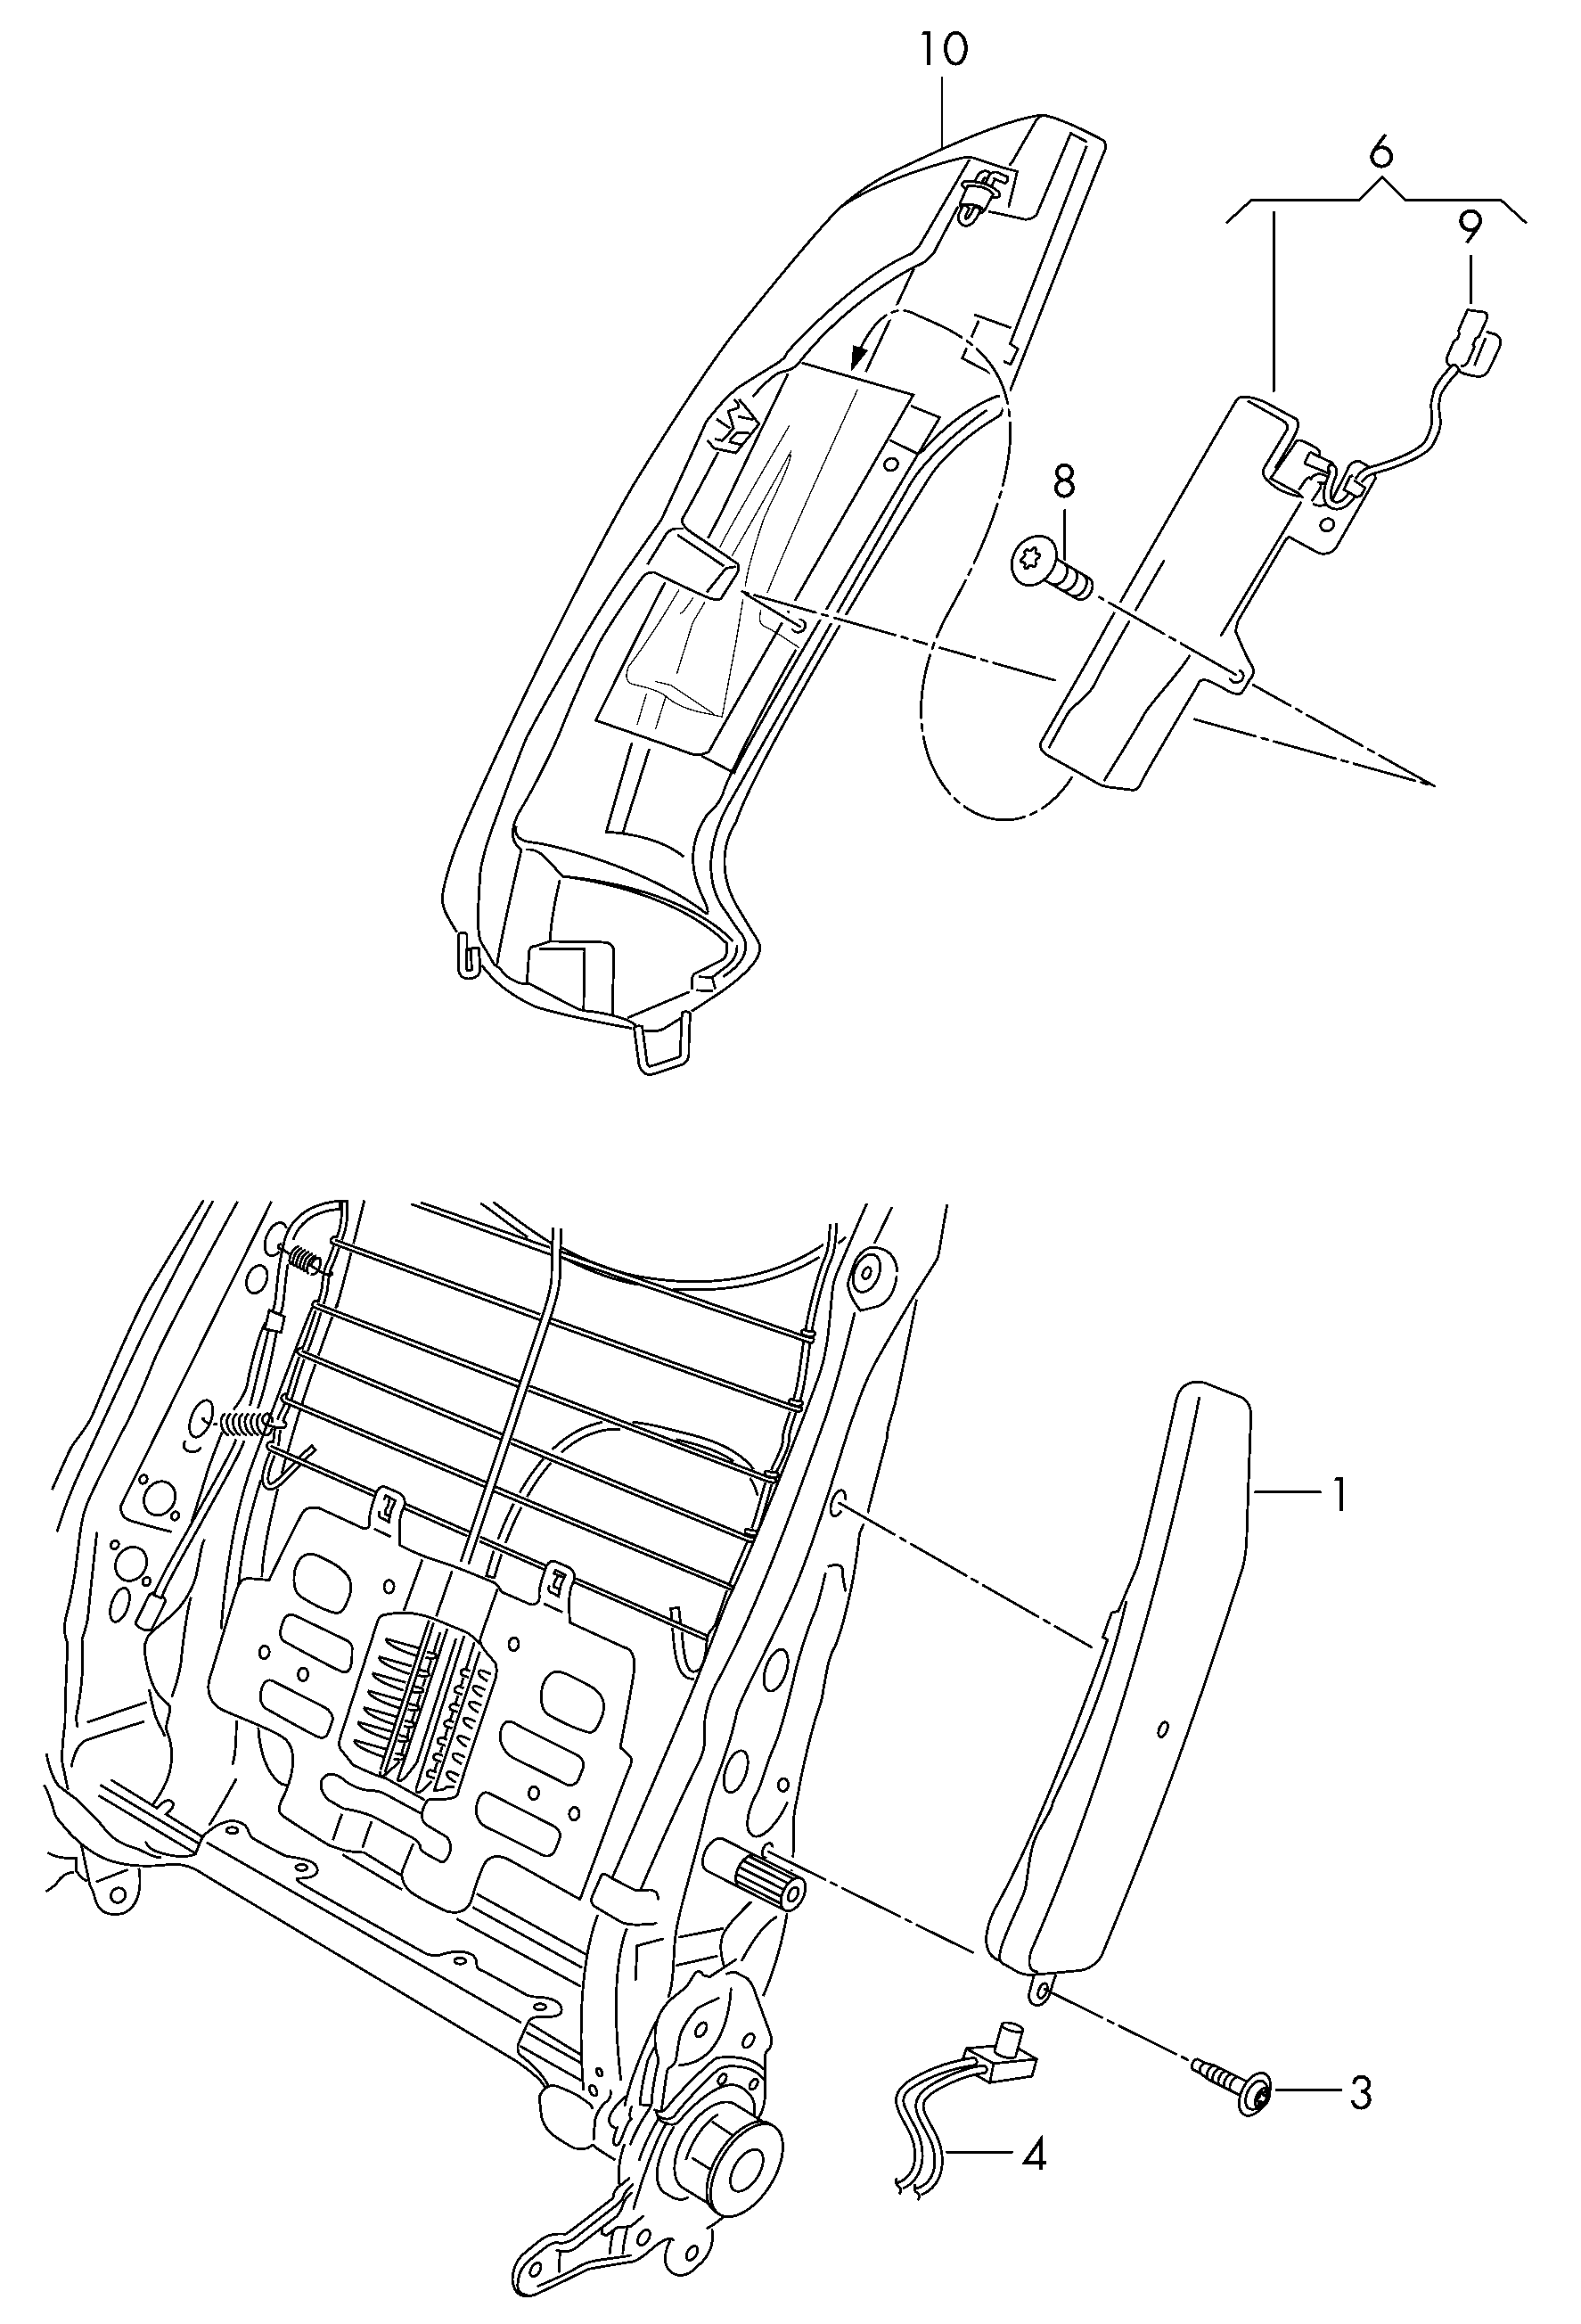 side airbag unit - Golf/Variant/4Motion(GOLF)  